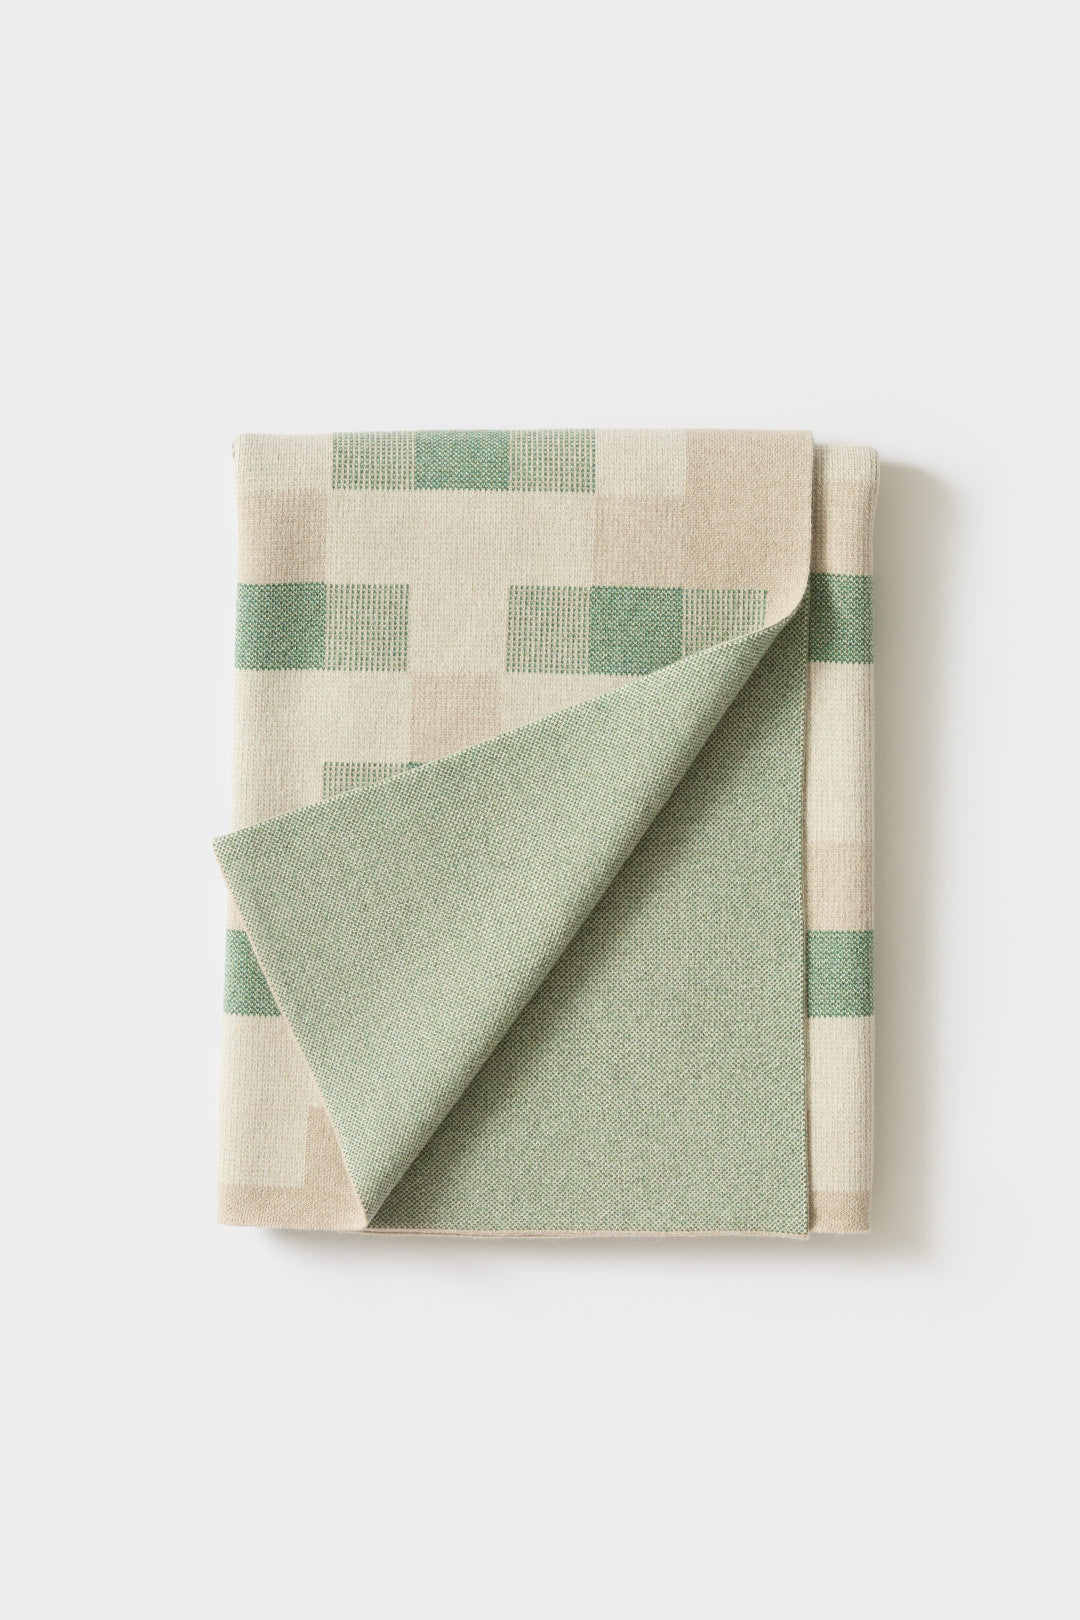 Blanket "Faro" - Oatmeal & Willow